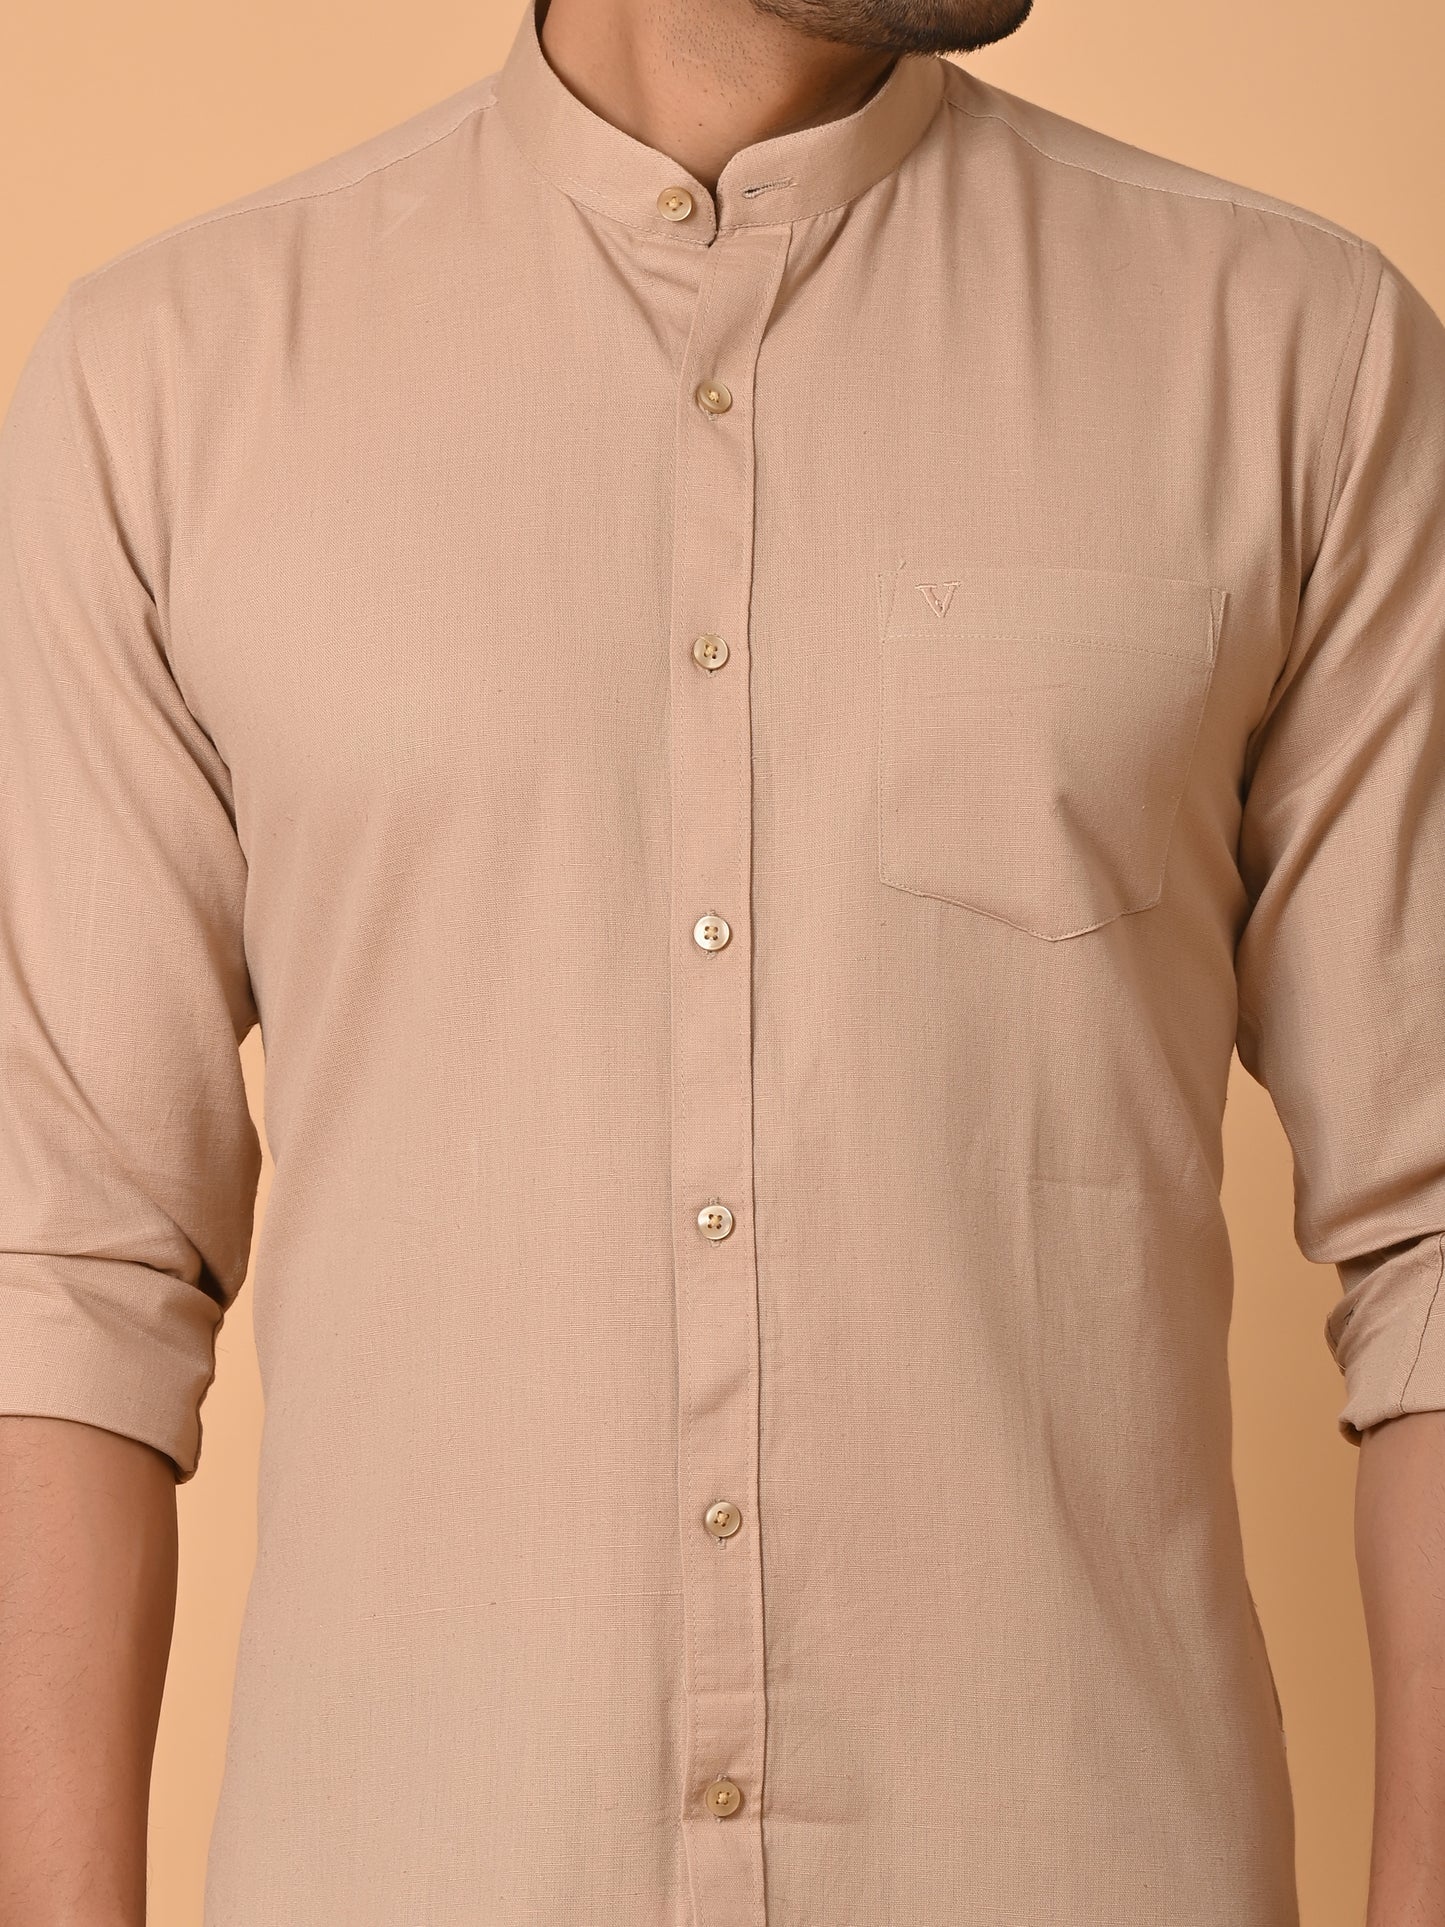 VJR Pine Brown Solid Shirt